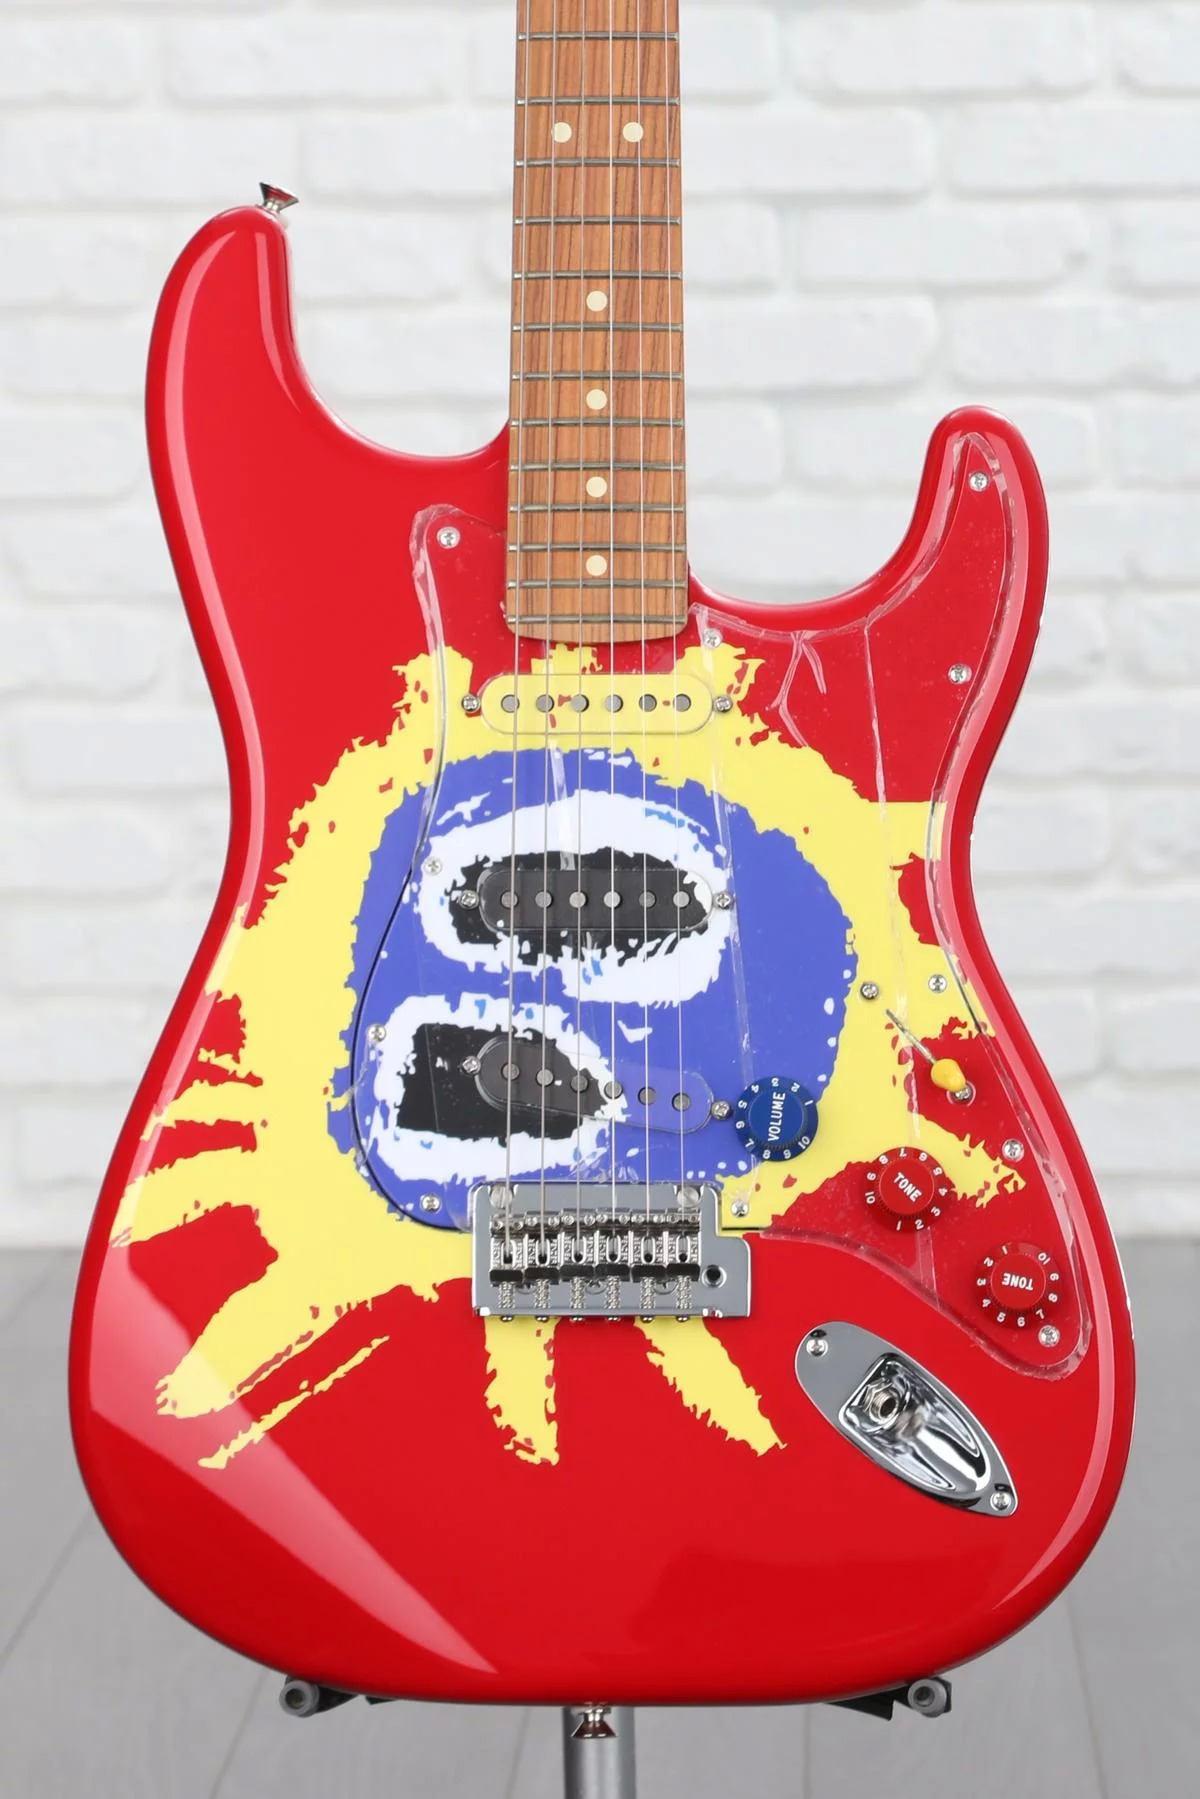 Fender 30th Anniversary Screamadelica Stratocaster guitar, Pau Ferro Fingerboard, Custom Graphic $850 on Amazon